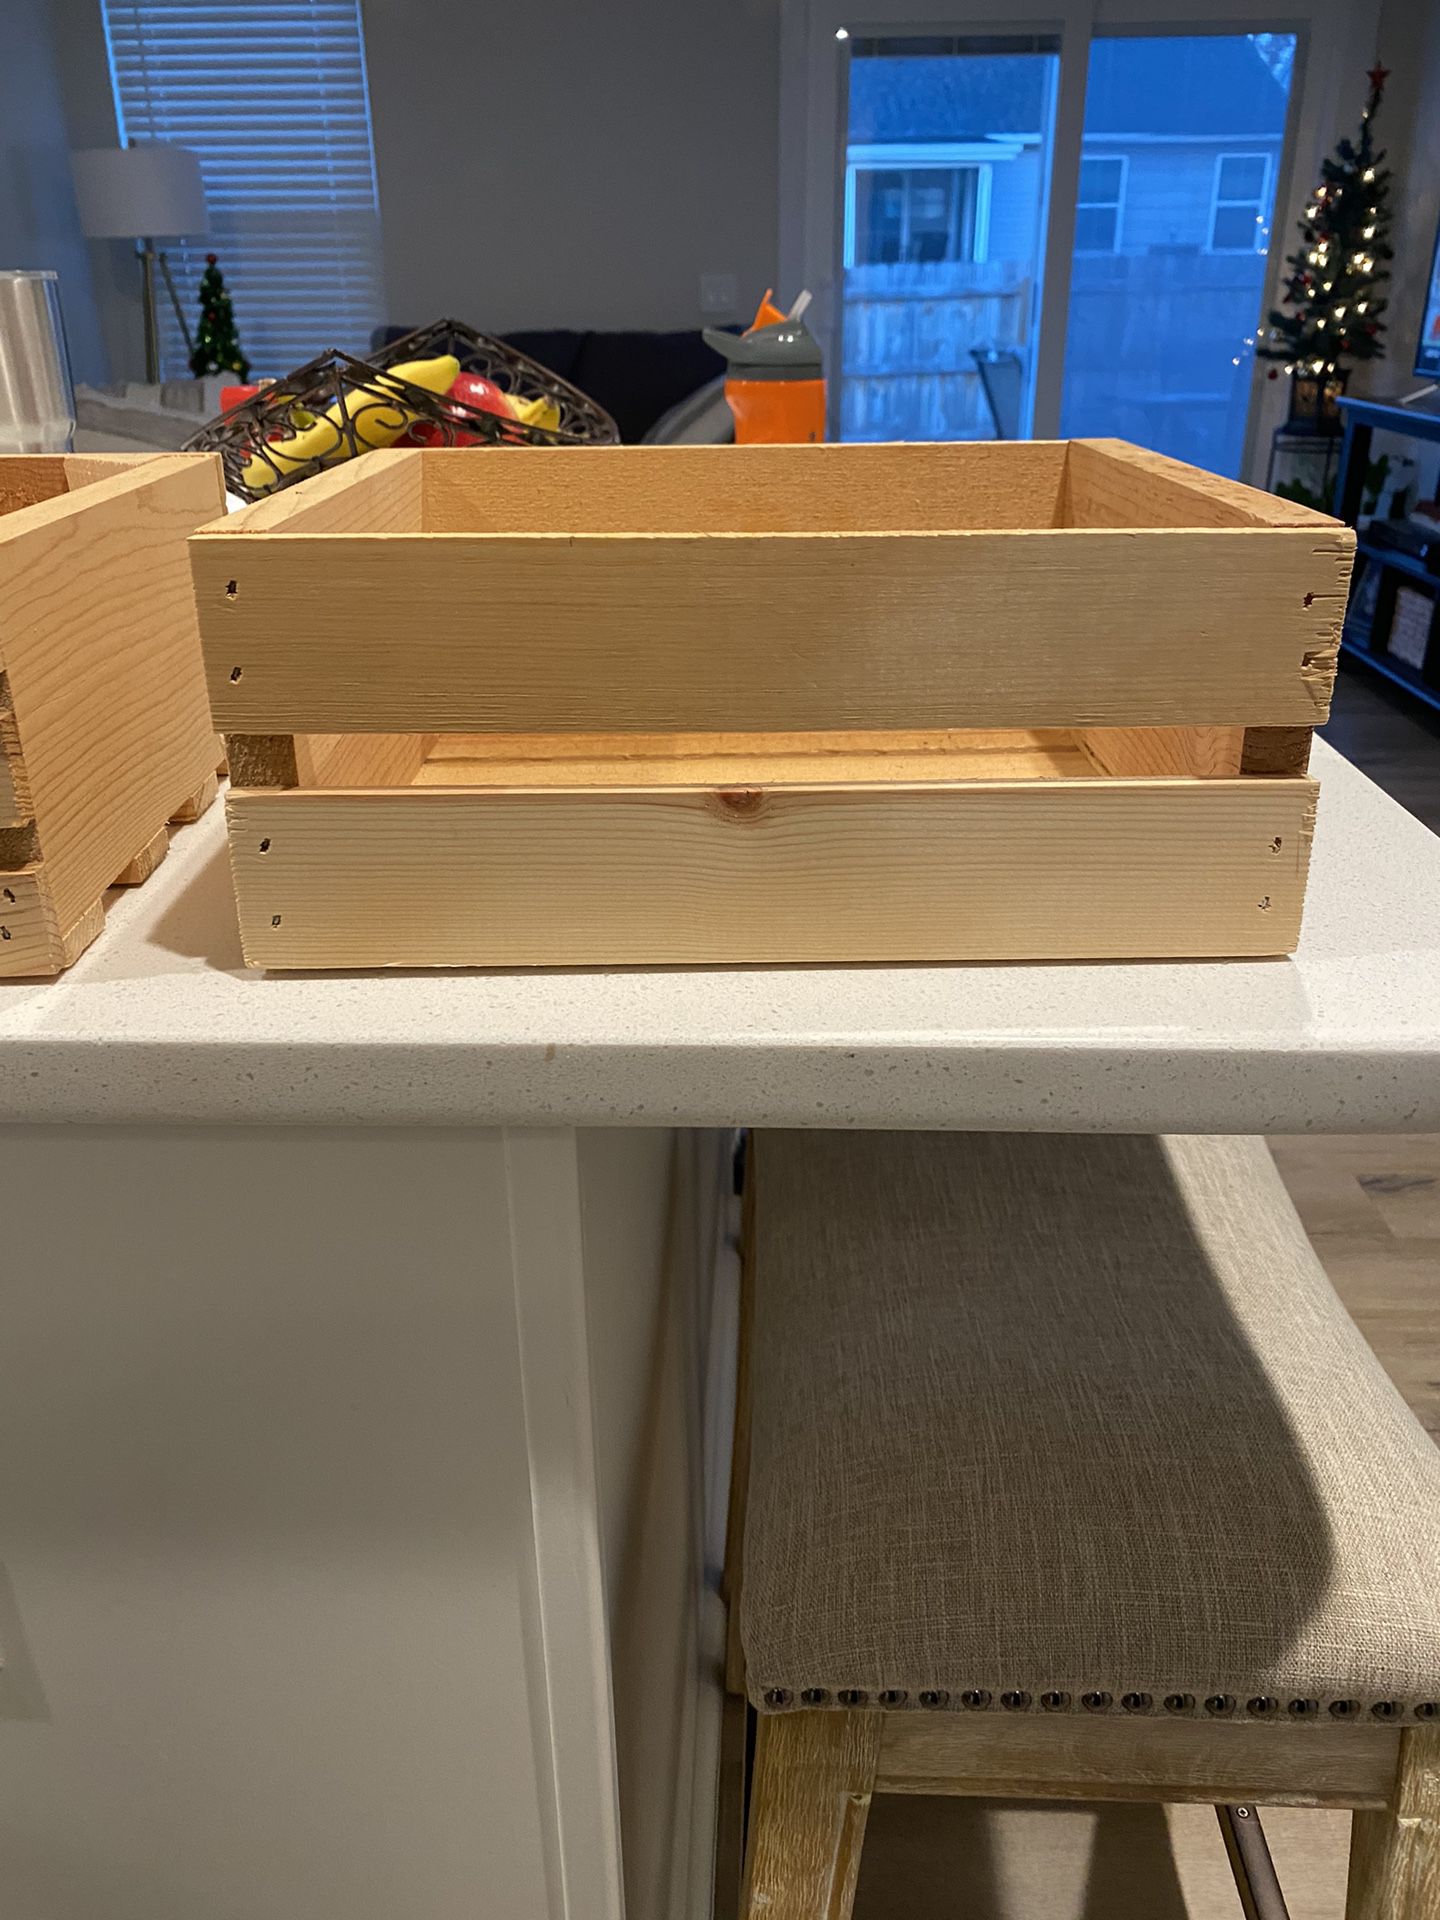 Wooden Crates 